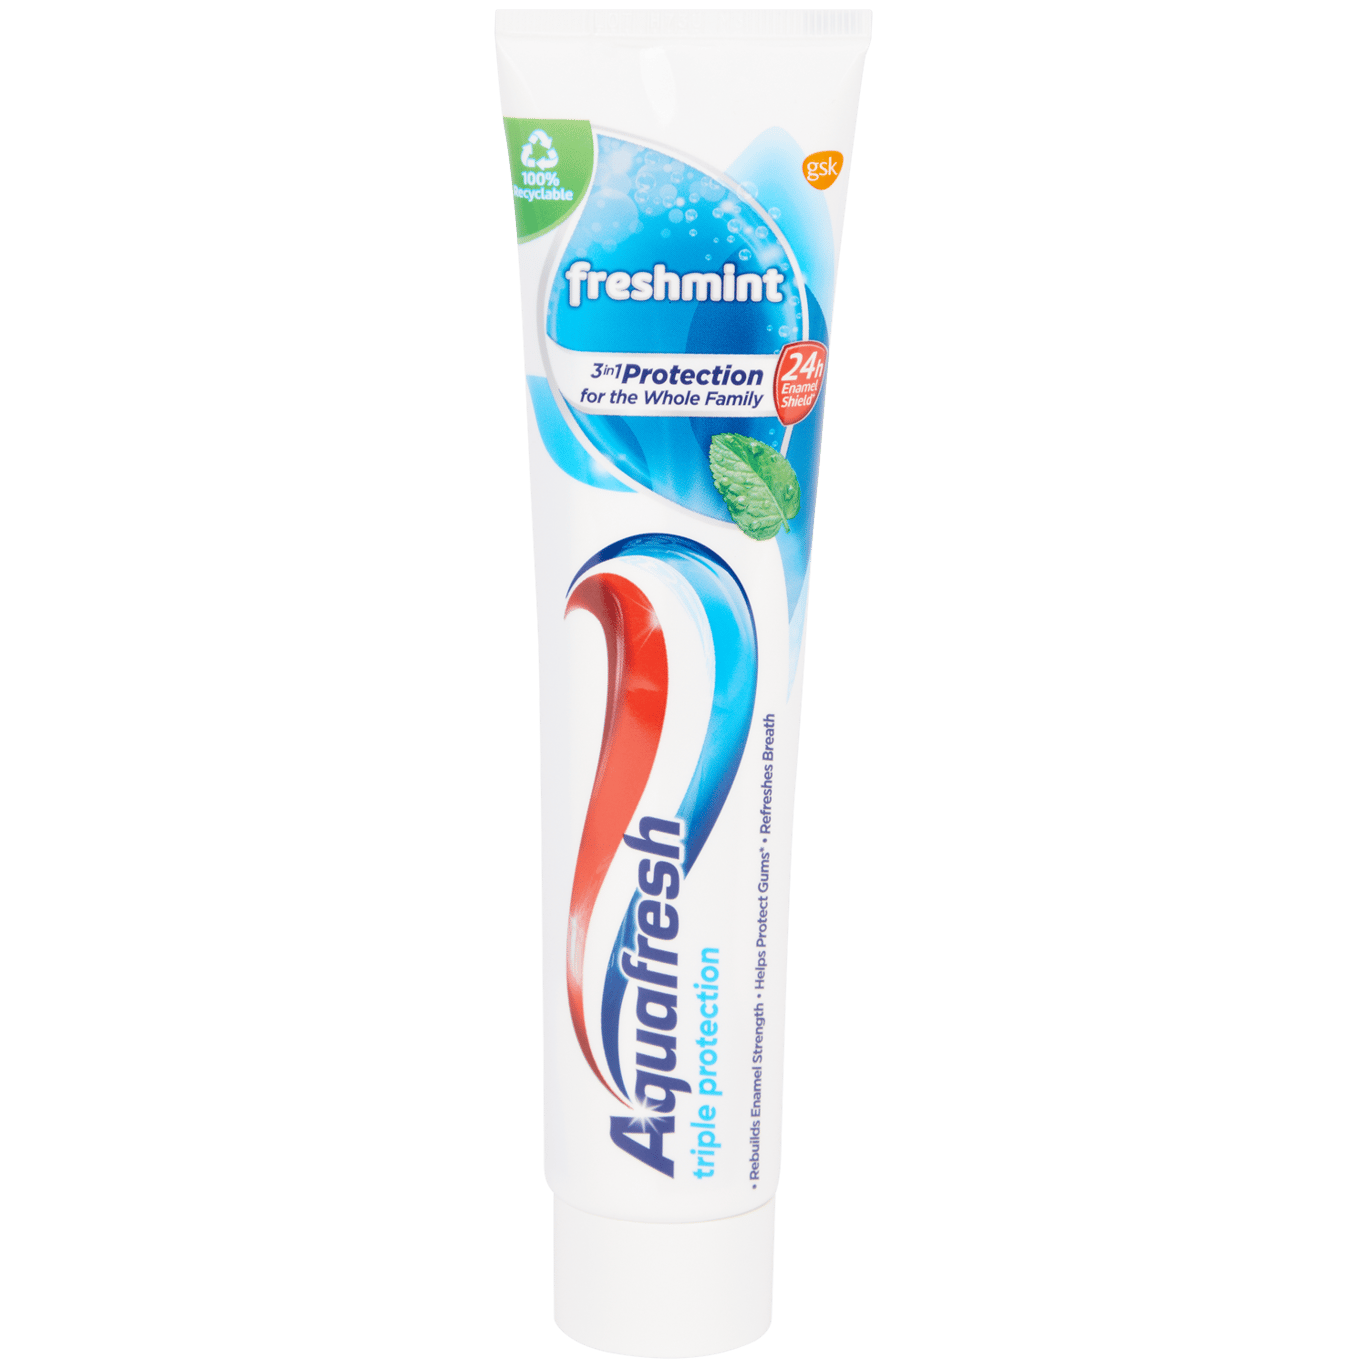 Aquafresh tandpasta